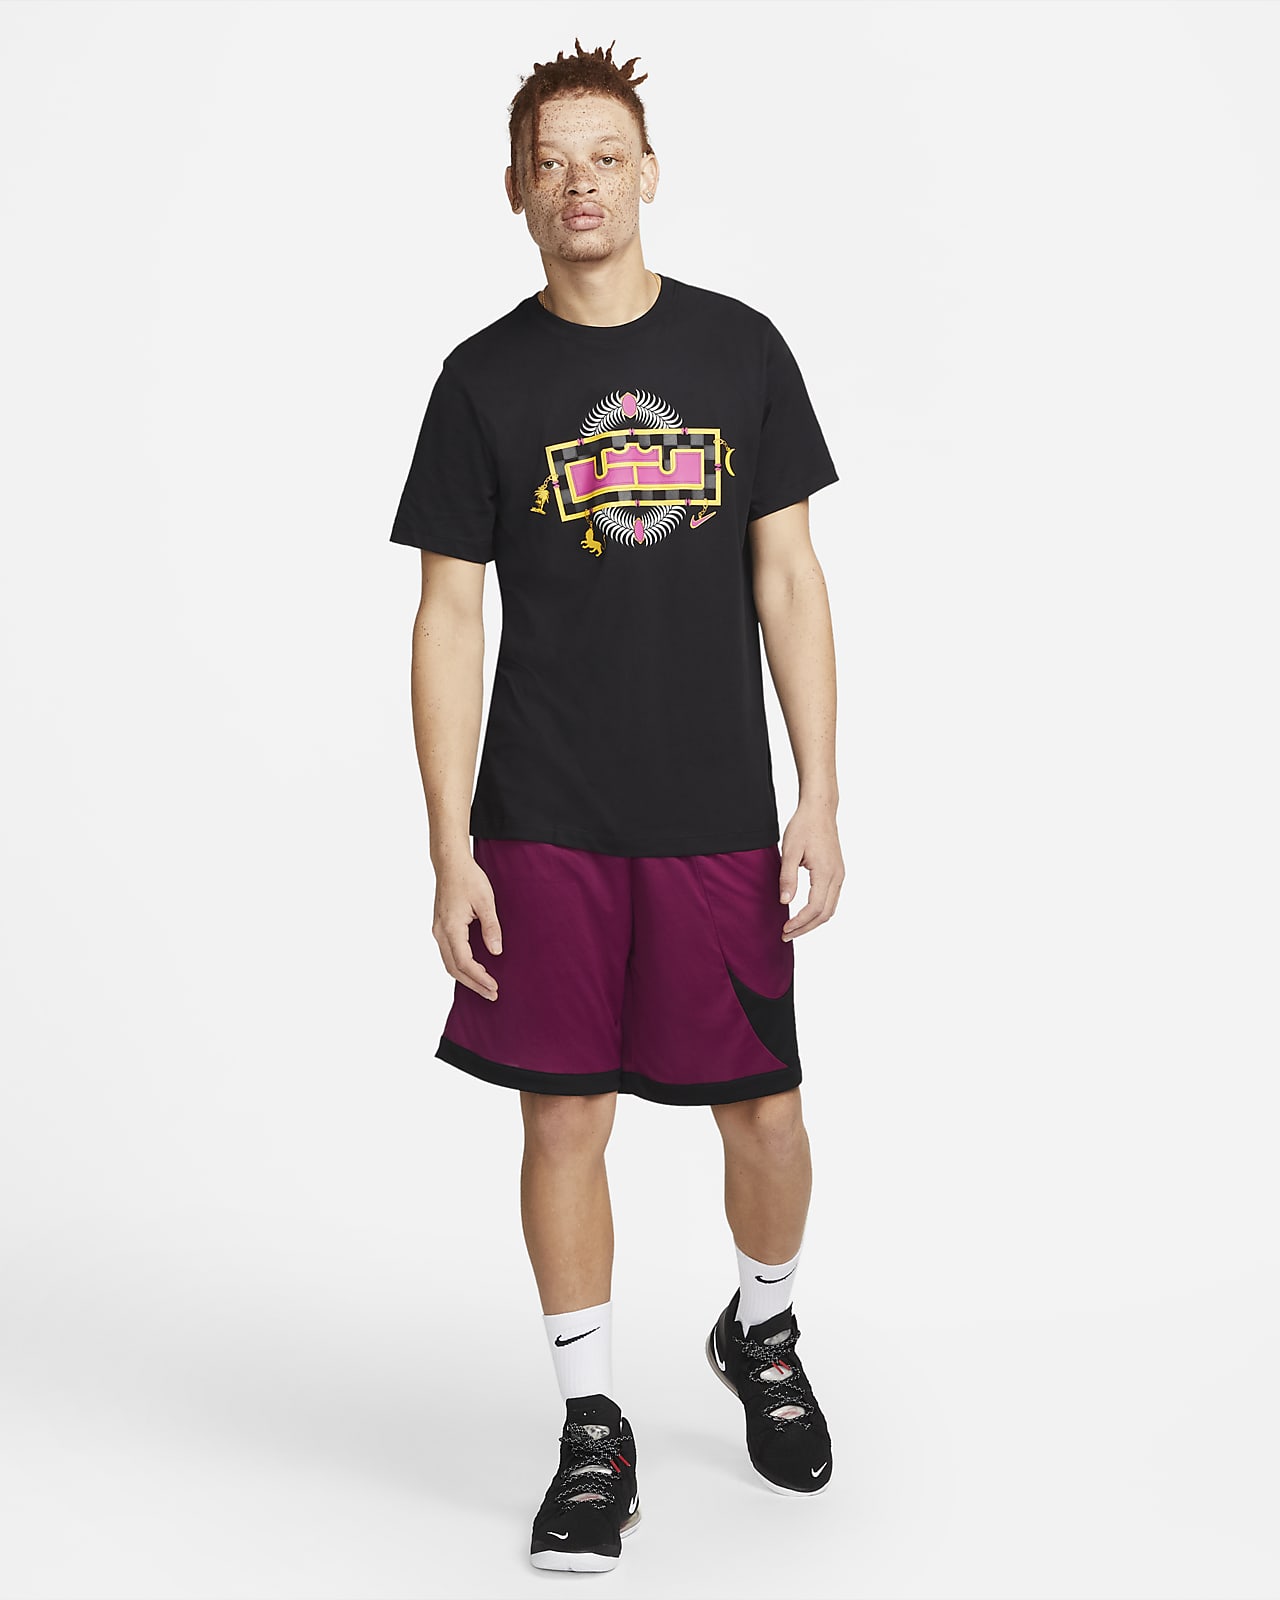 Nike LeBron Men's Basketball T-Shirt 